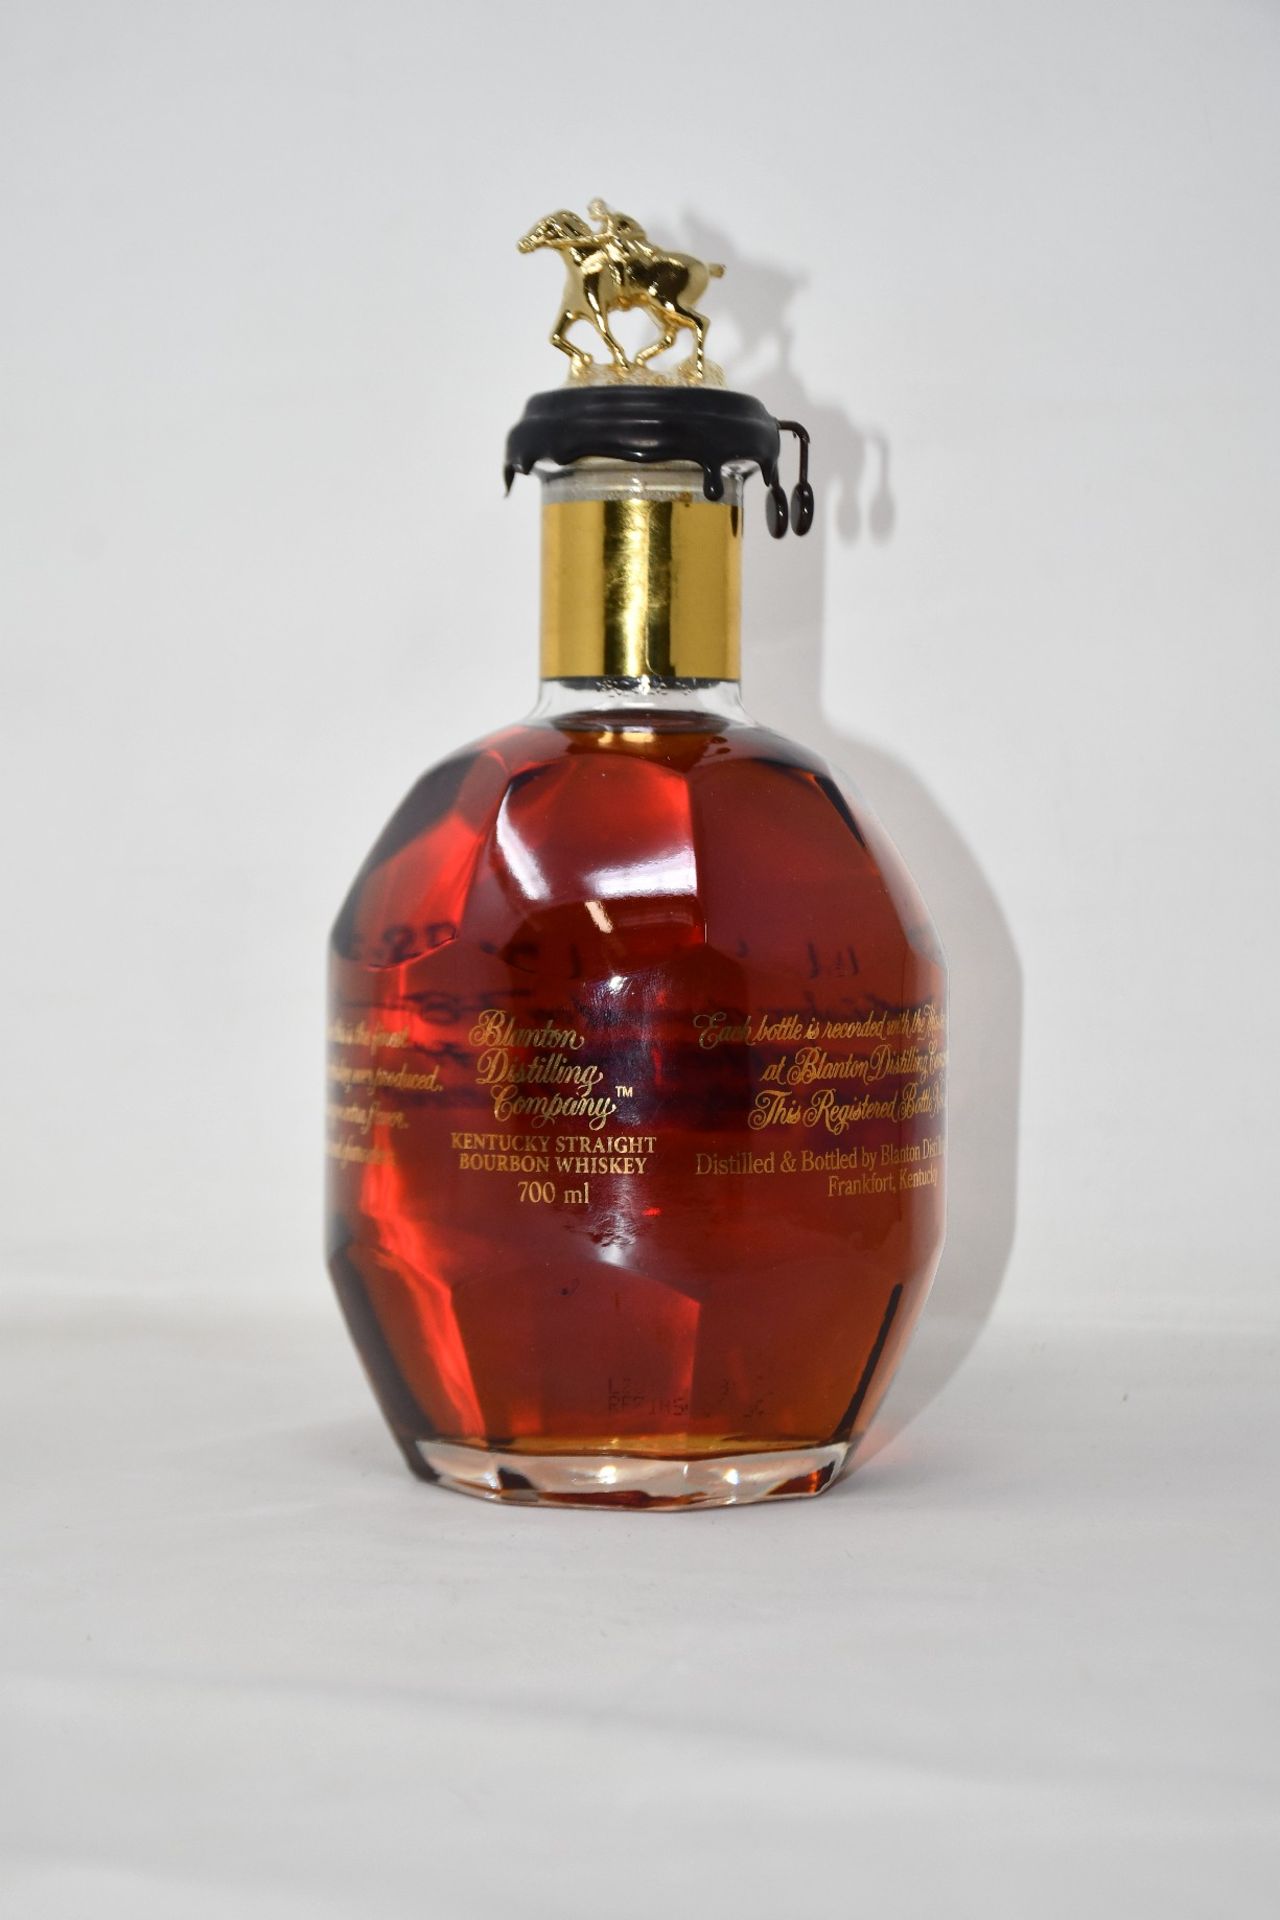 A bottle of Blanton's Kentucky straight bourbon whiskey (700ml) (Over 18s only).